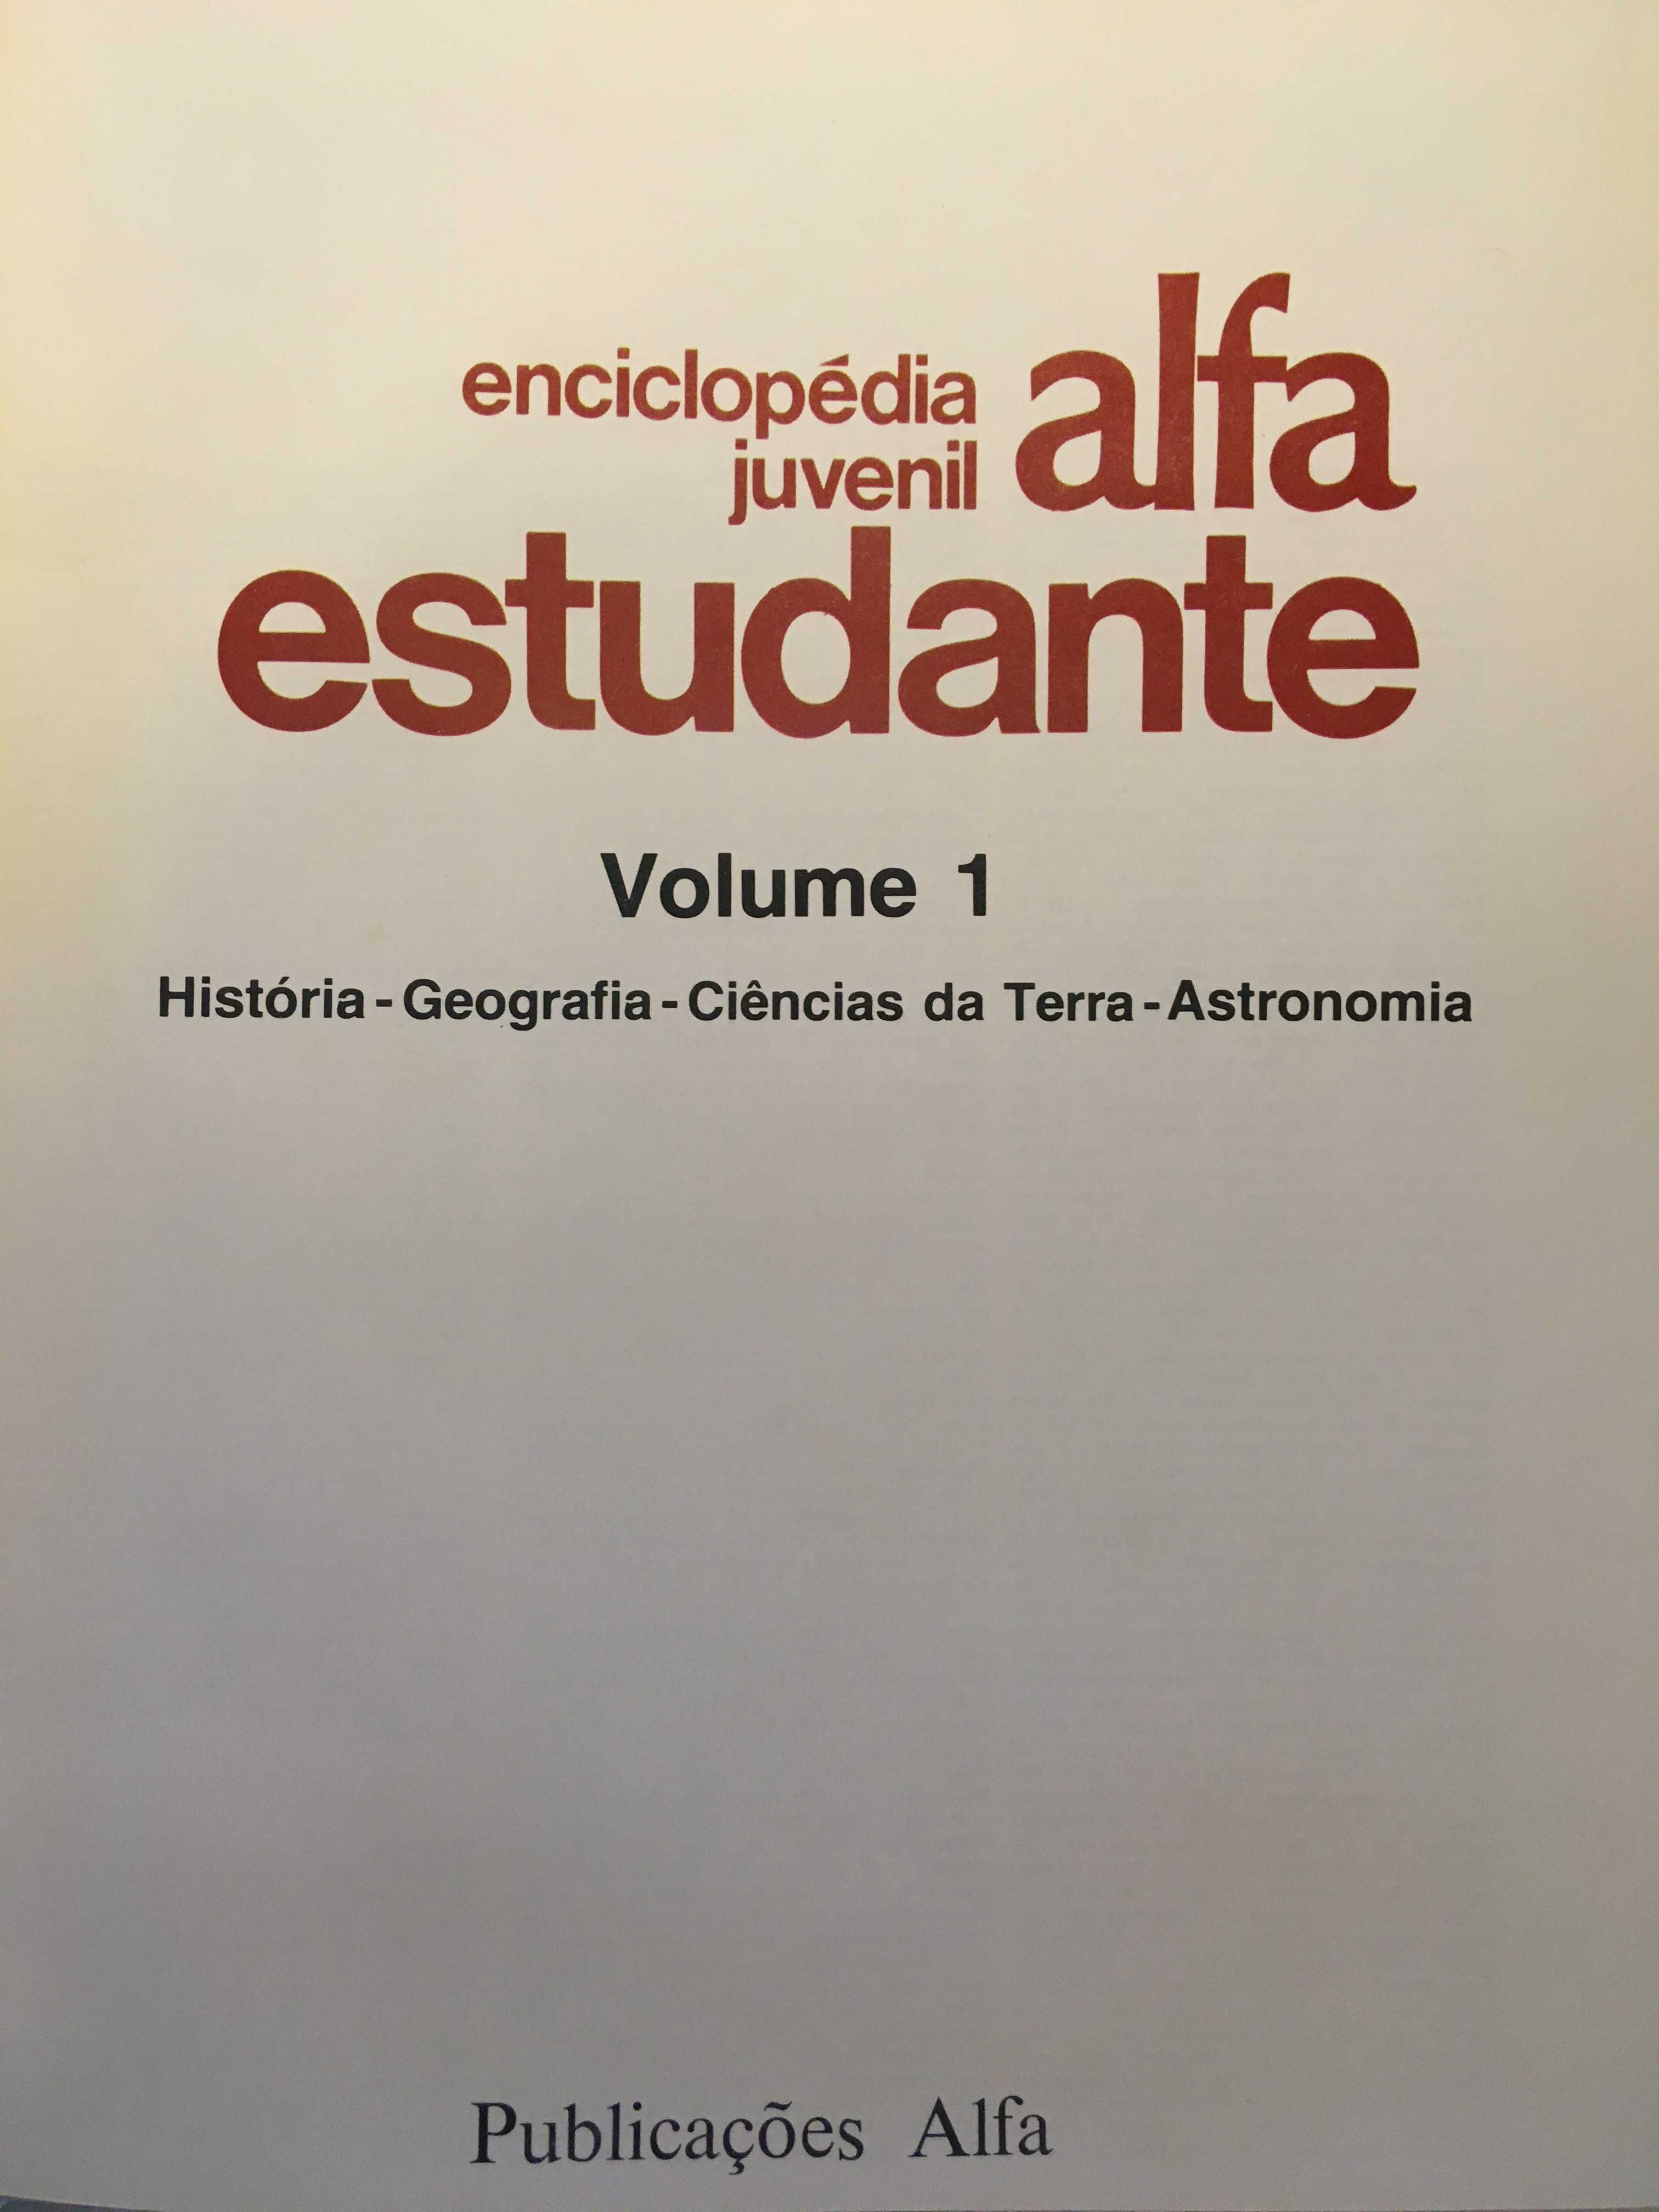 Enciclopédia Juvenil Alfa Estudante